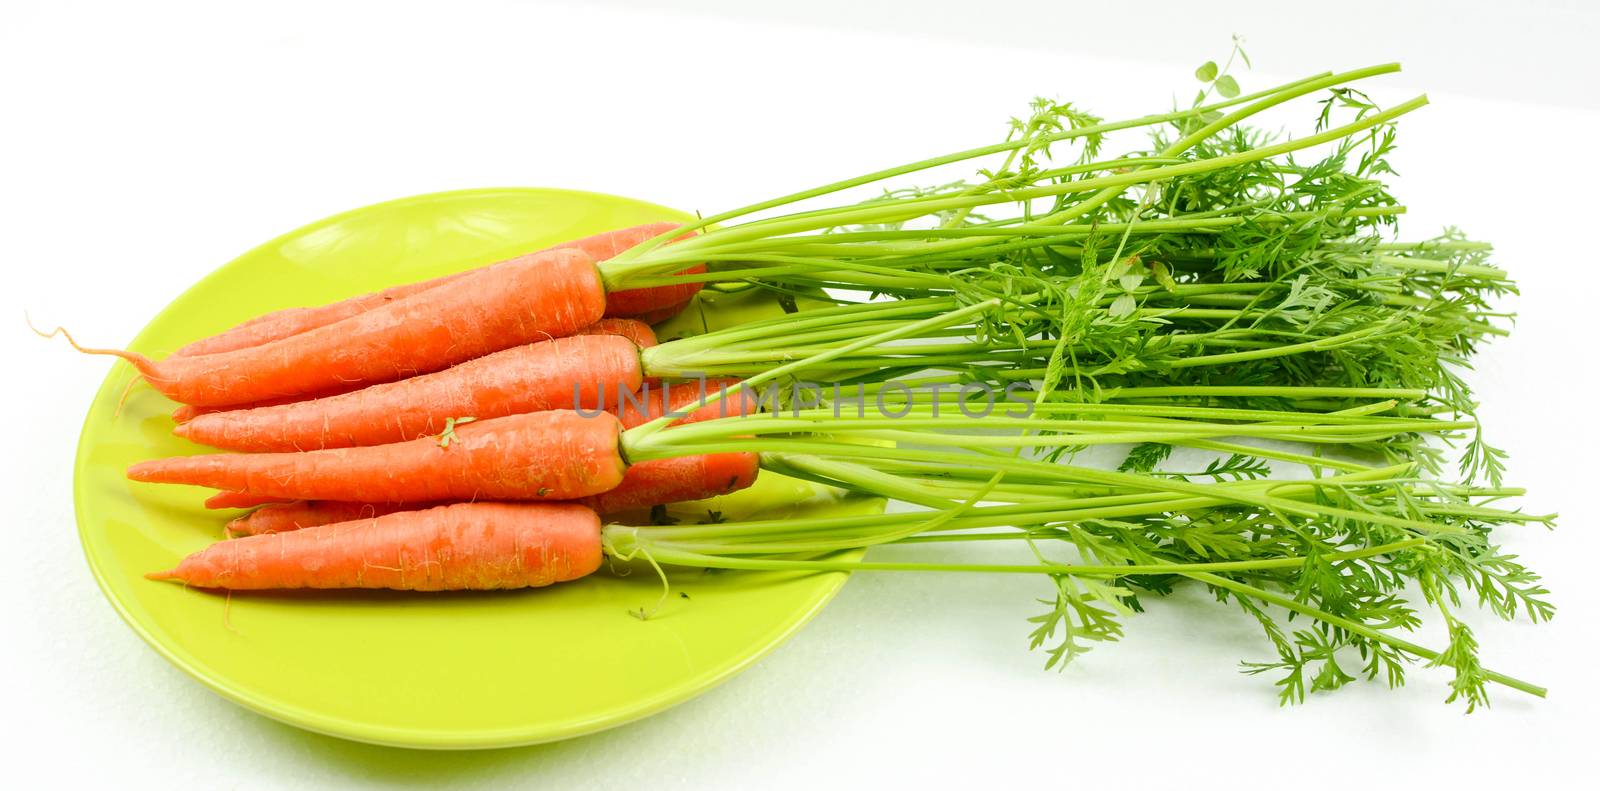 carrots by iacobino